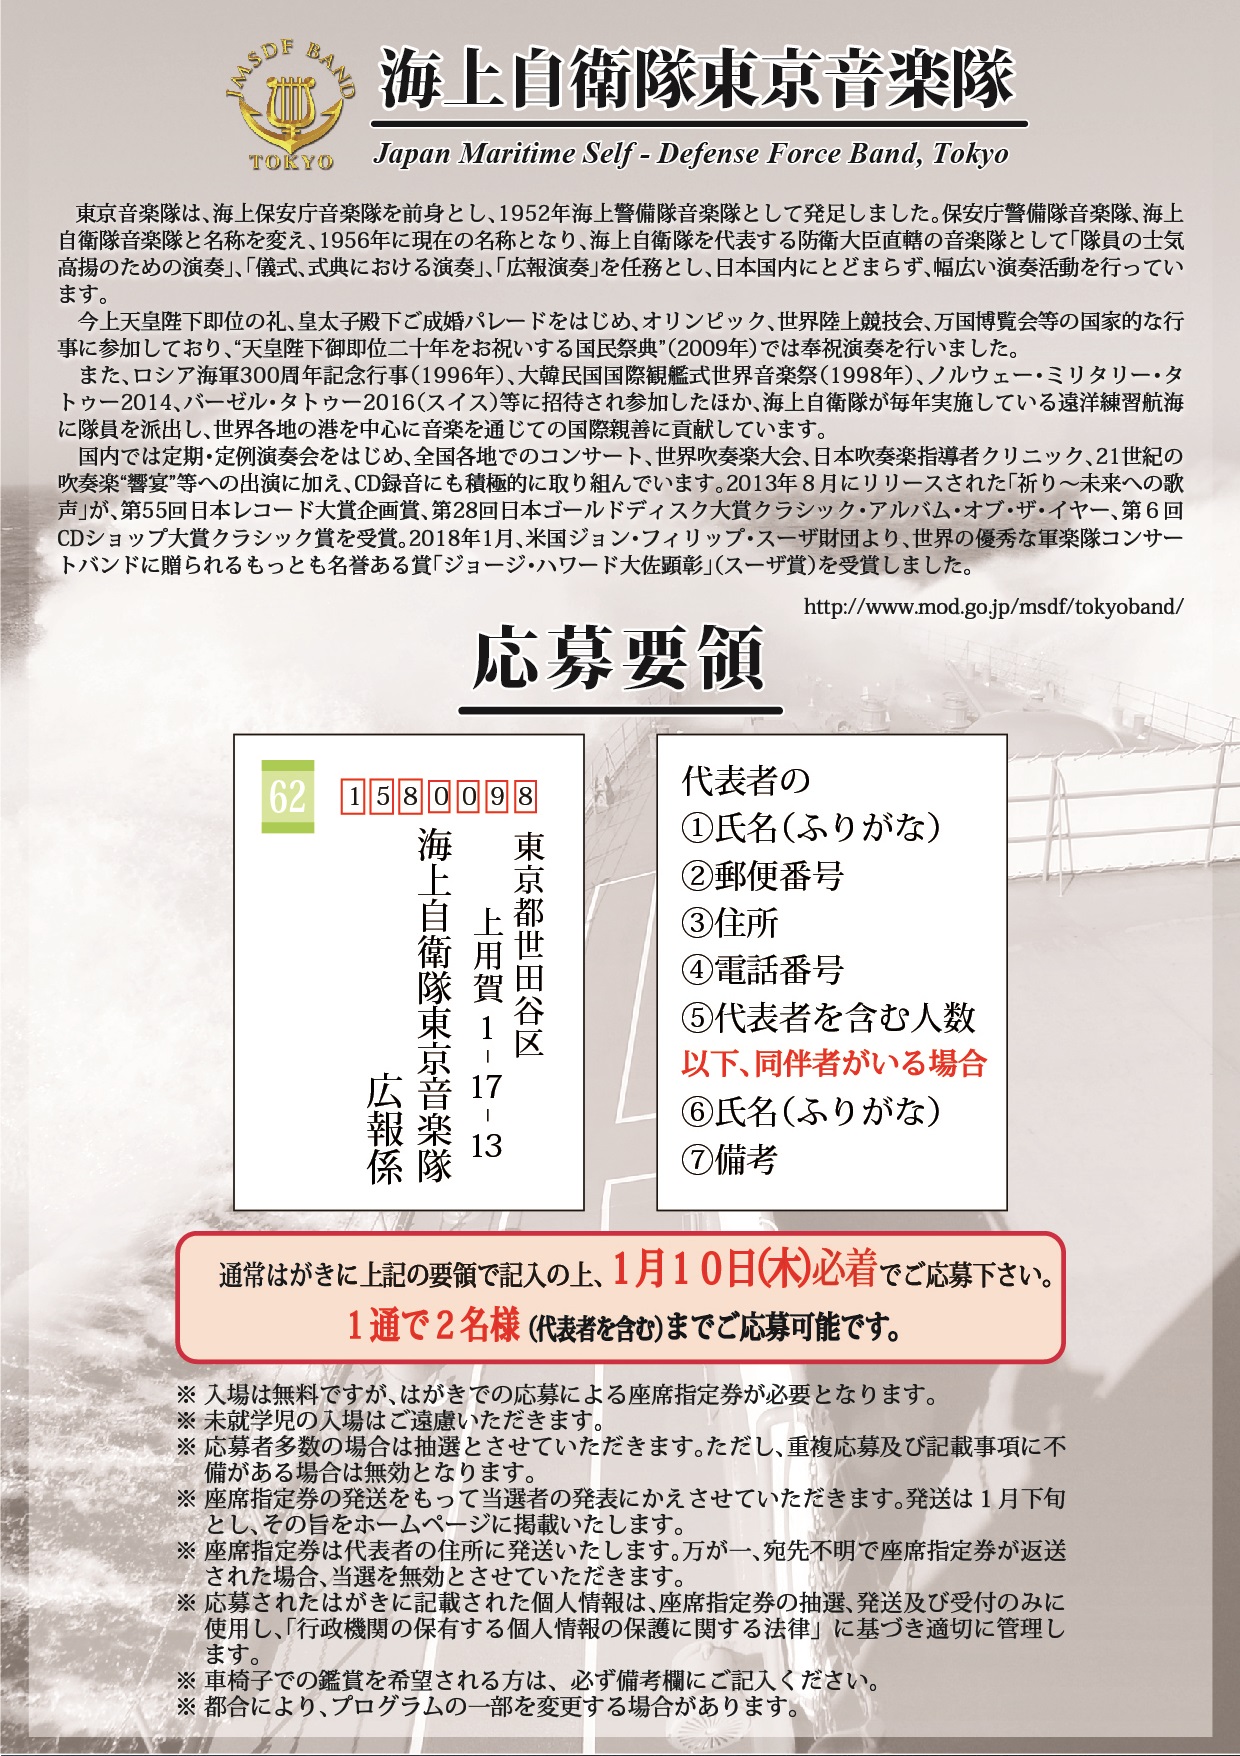 陸海空自衛隊 米軍 防災 19年2月イベント 平成31年 陸自調査団